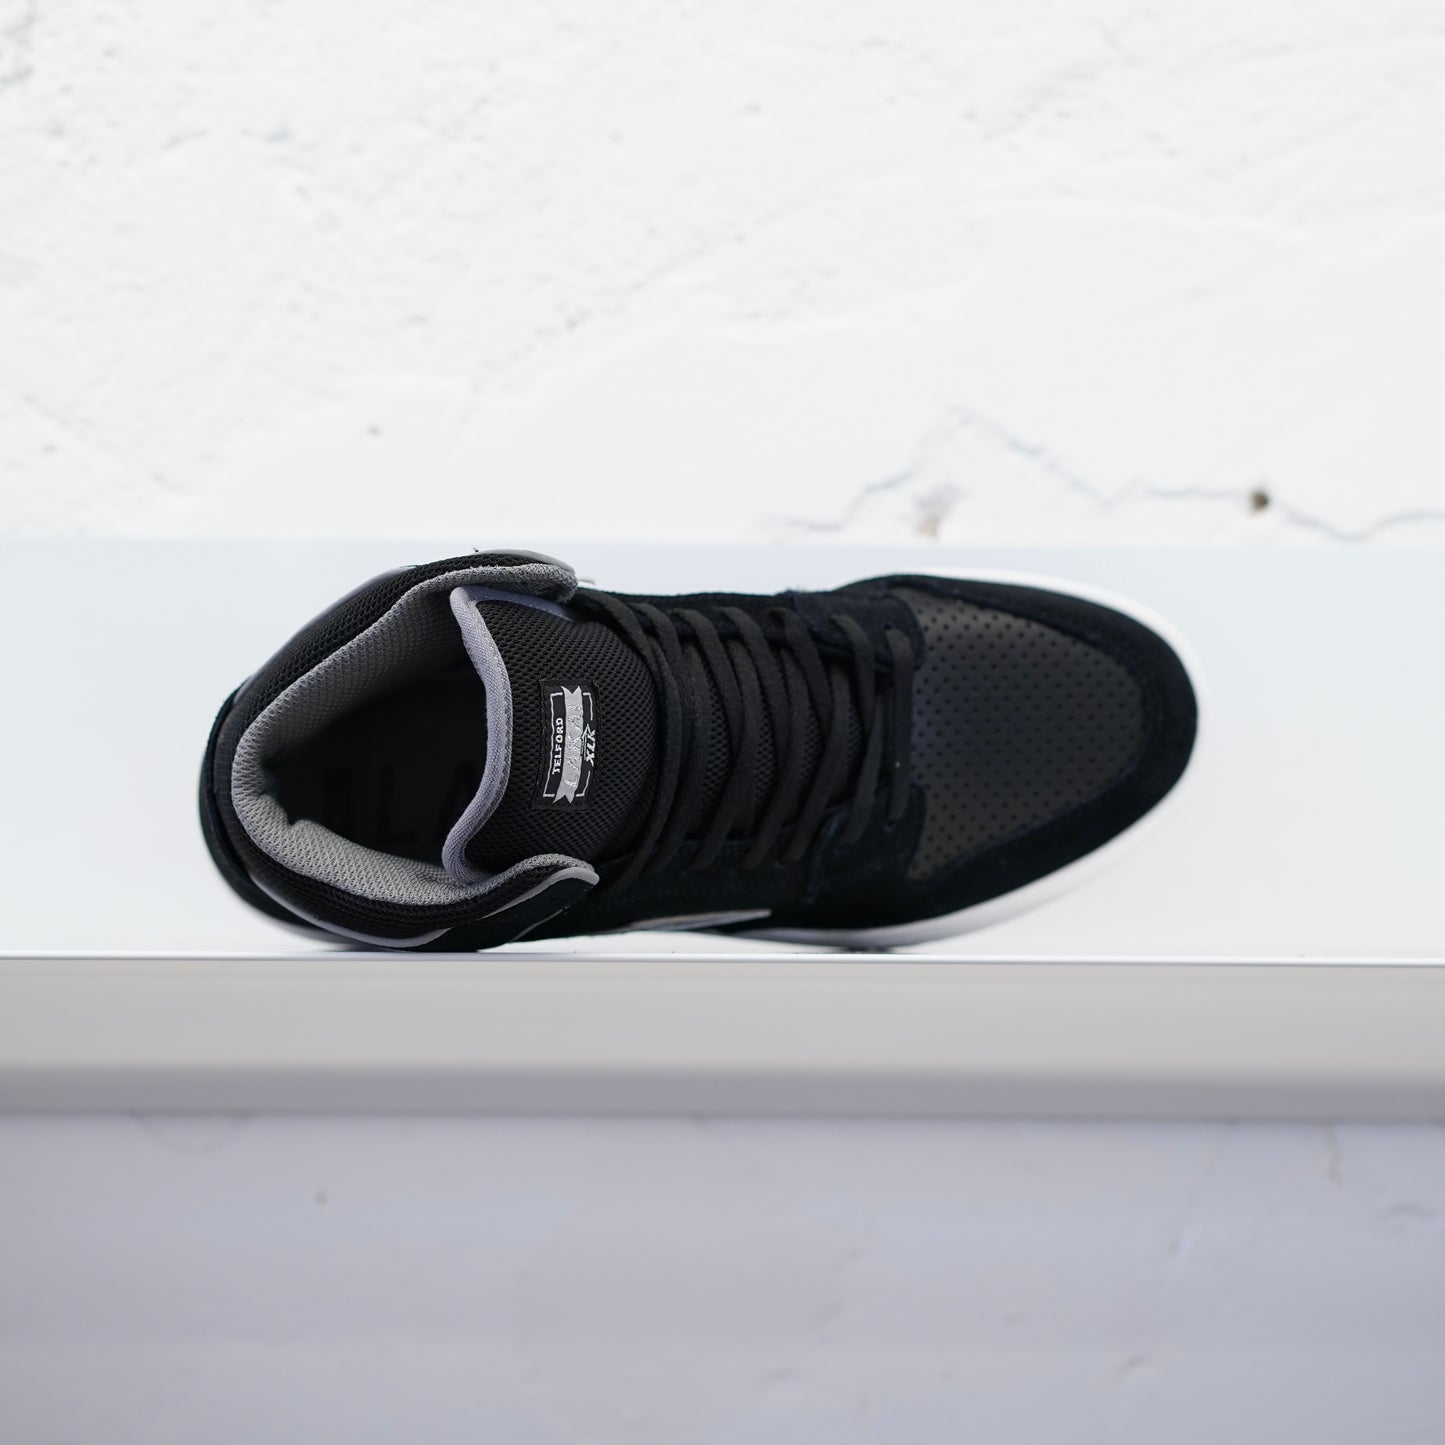 Lakai - Telford High Shoes - Black/Reflective